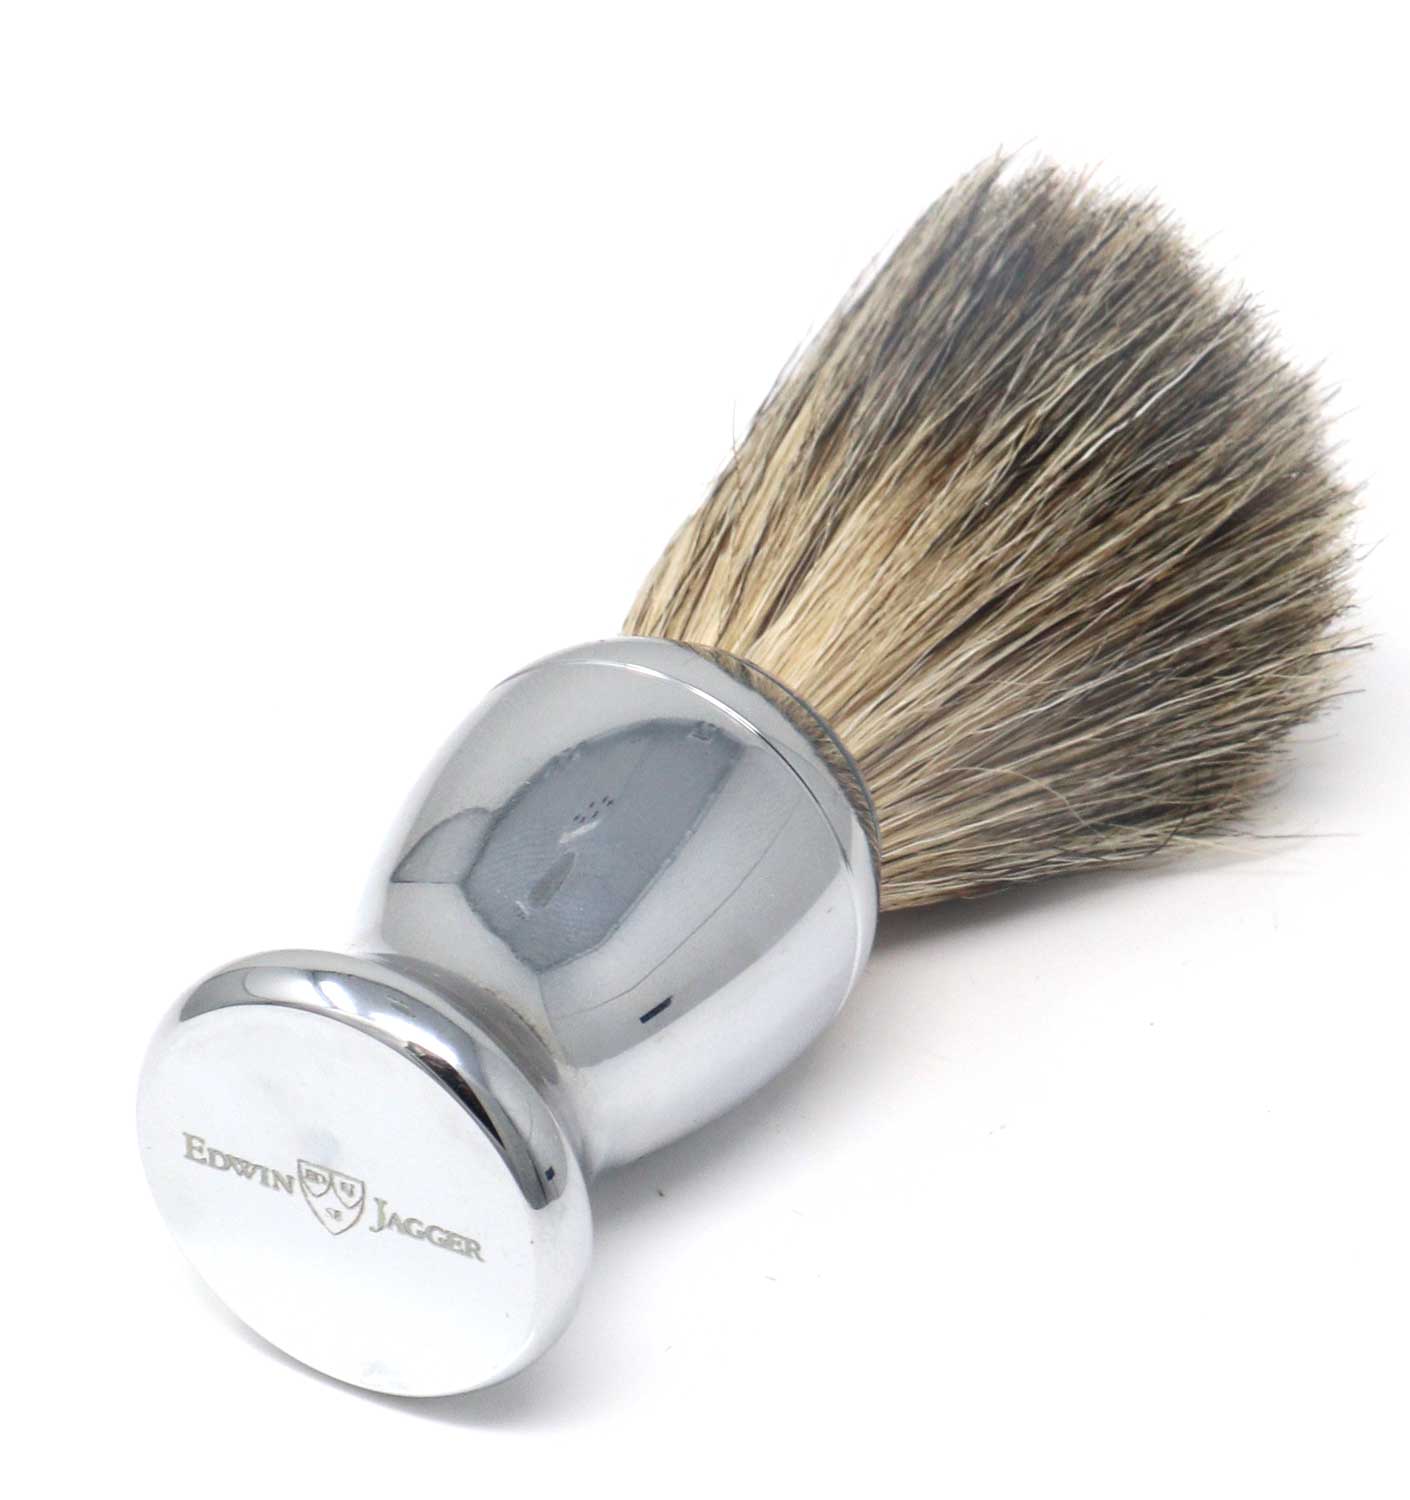 Edwin Jagger Chrome Plated Shaving Brush With Badger Fill